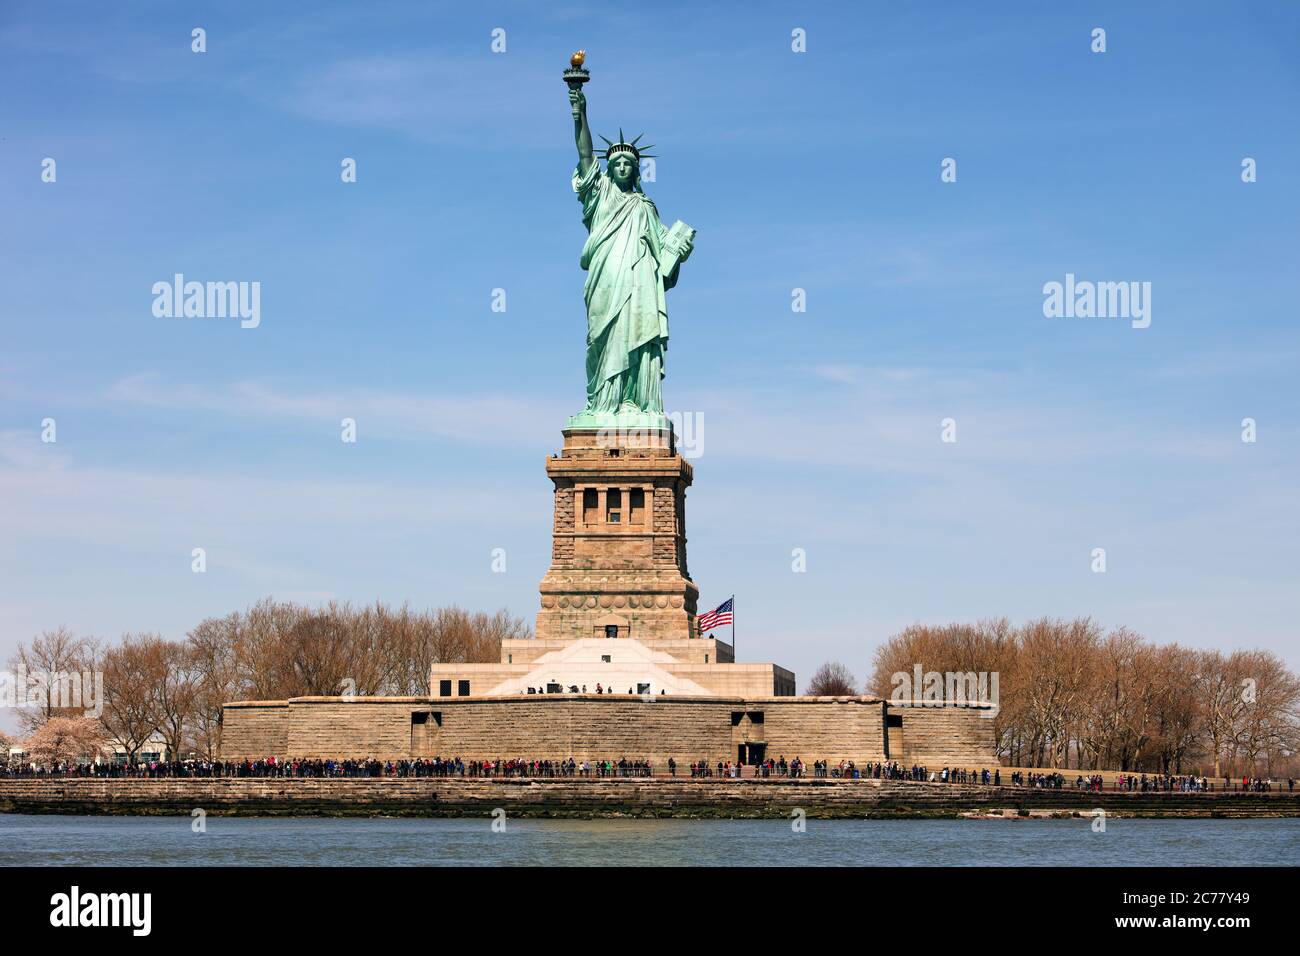 Statue of Liberty, New York Stock Photo